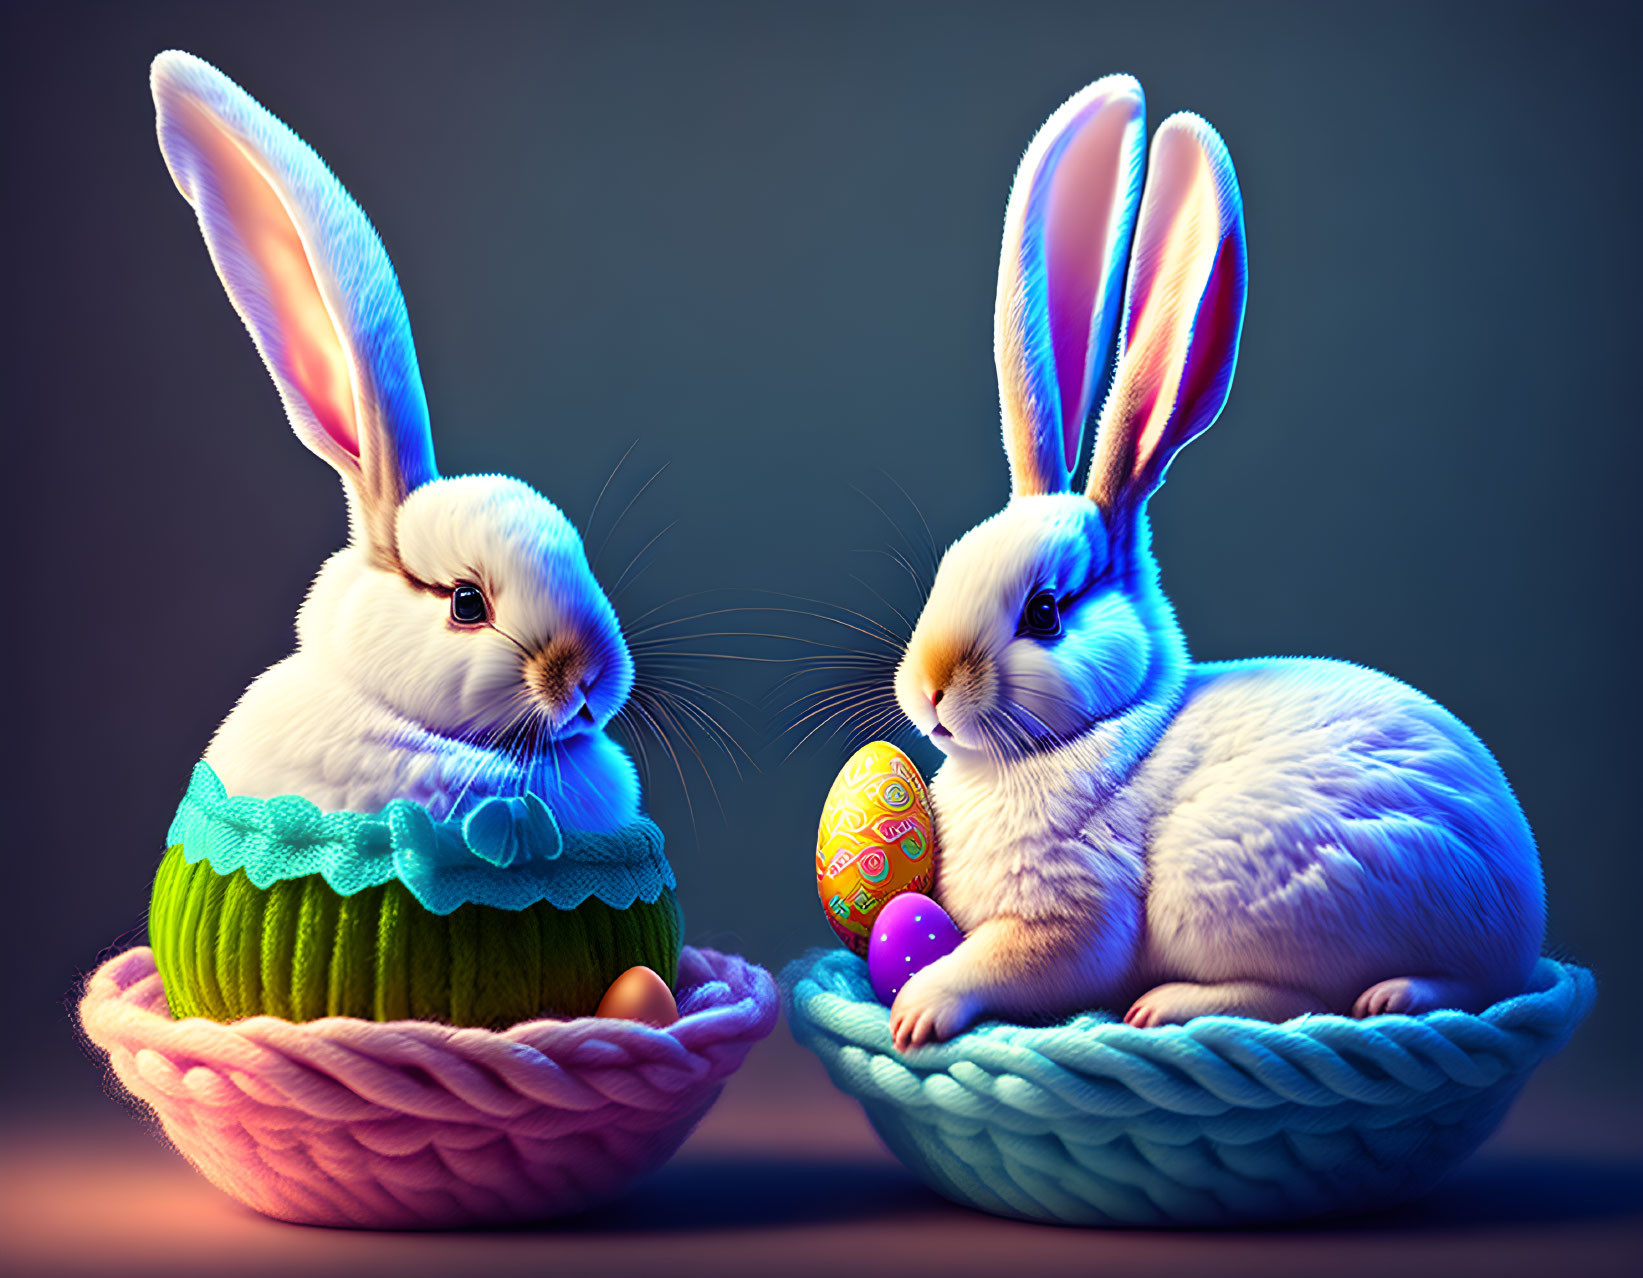 Colorful Digital Bunnies in Easter Egg Basket Scene